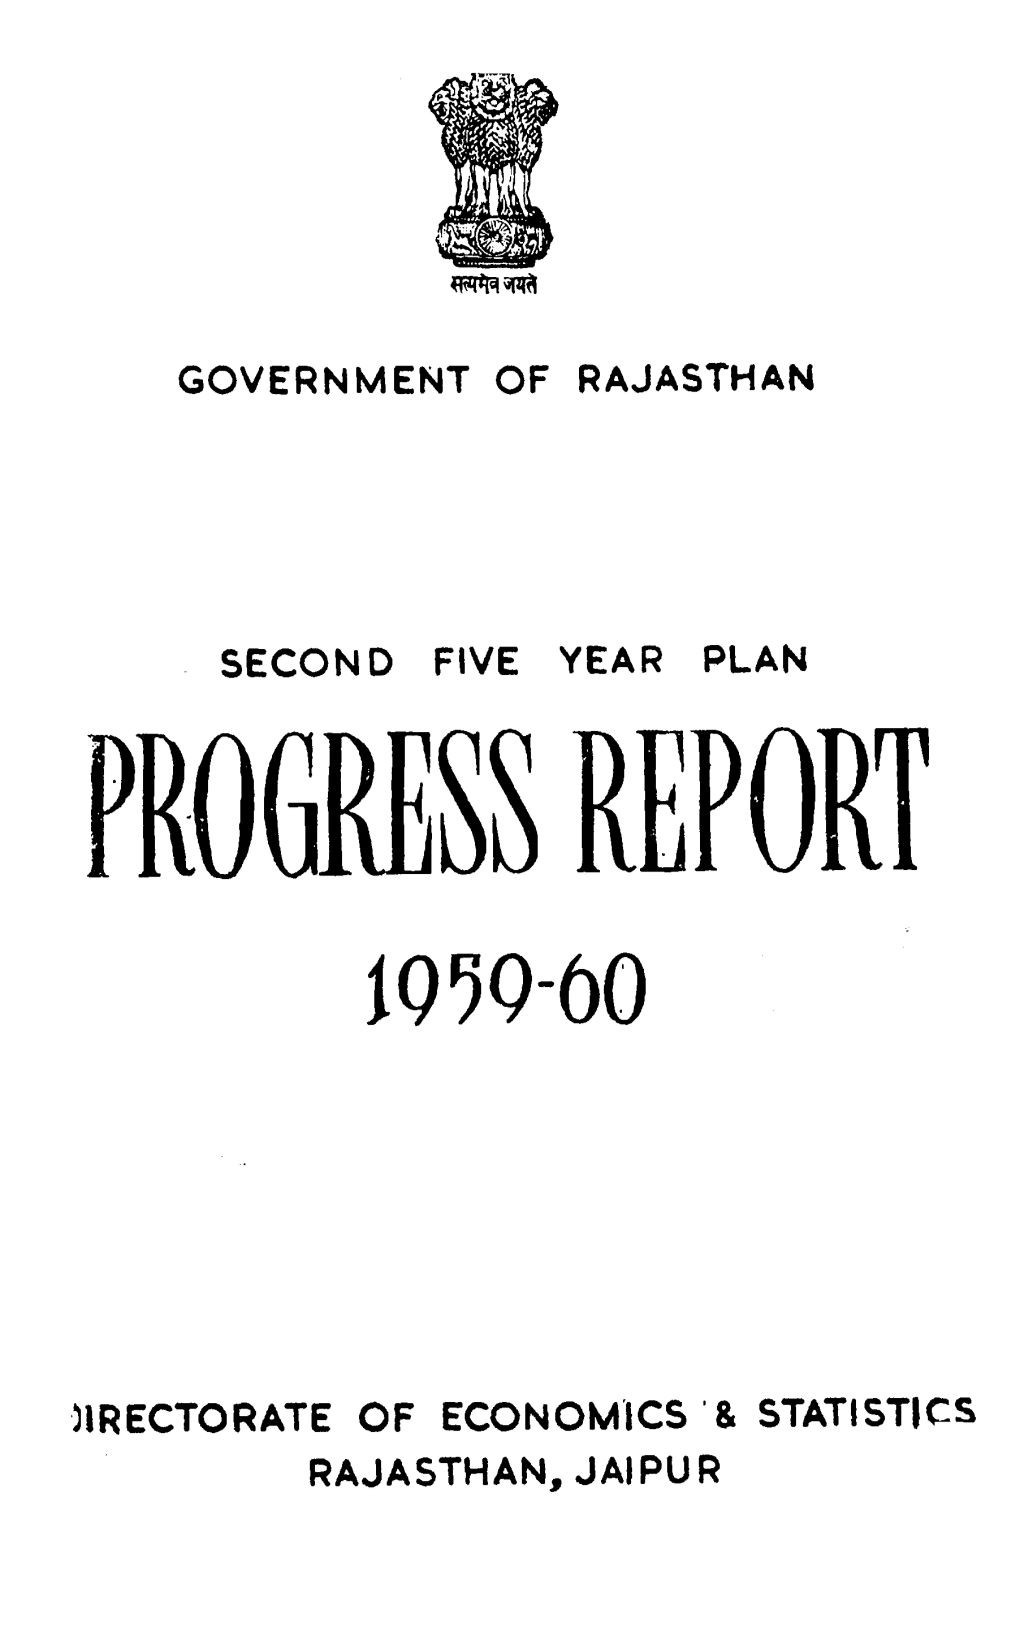 Second Five Year Plan Progress Report 1959-60